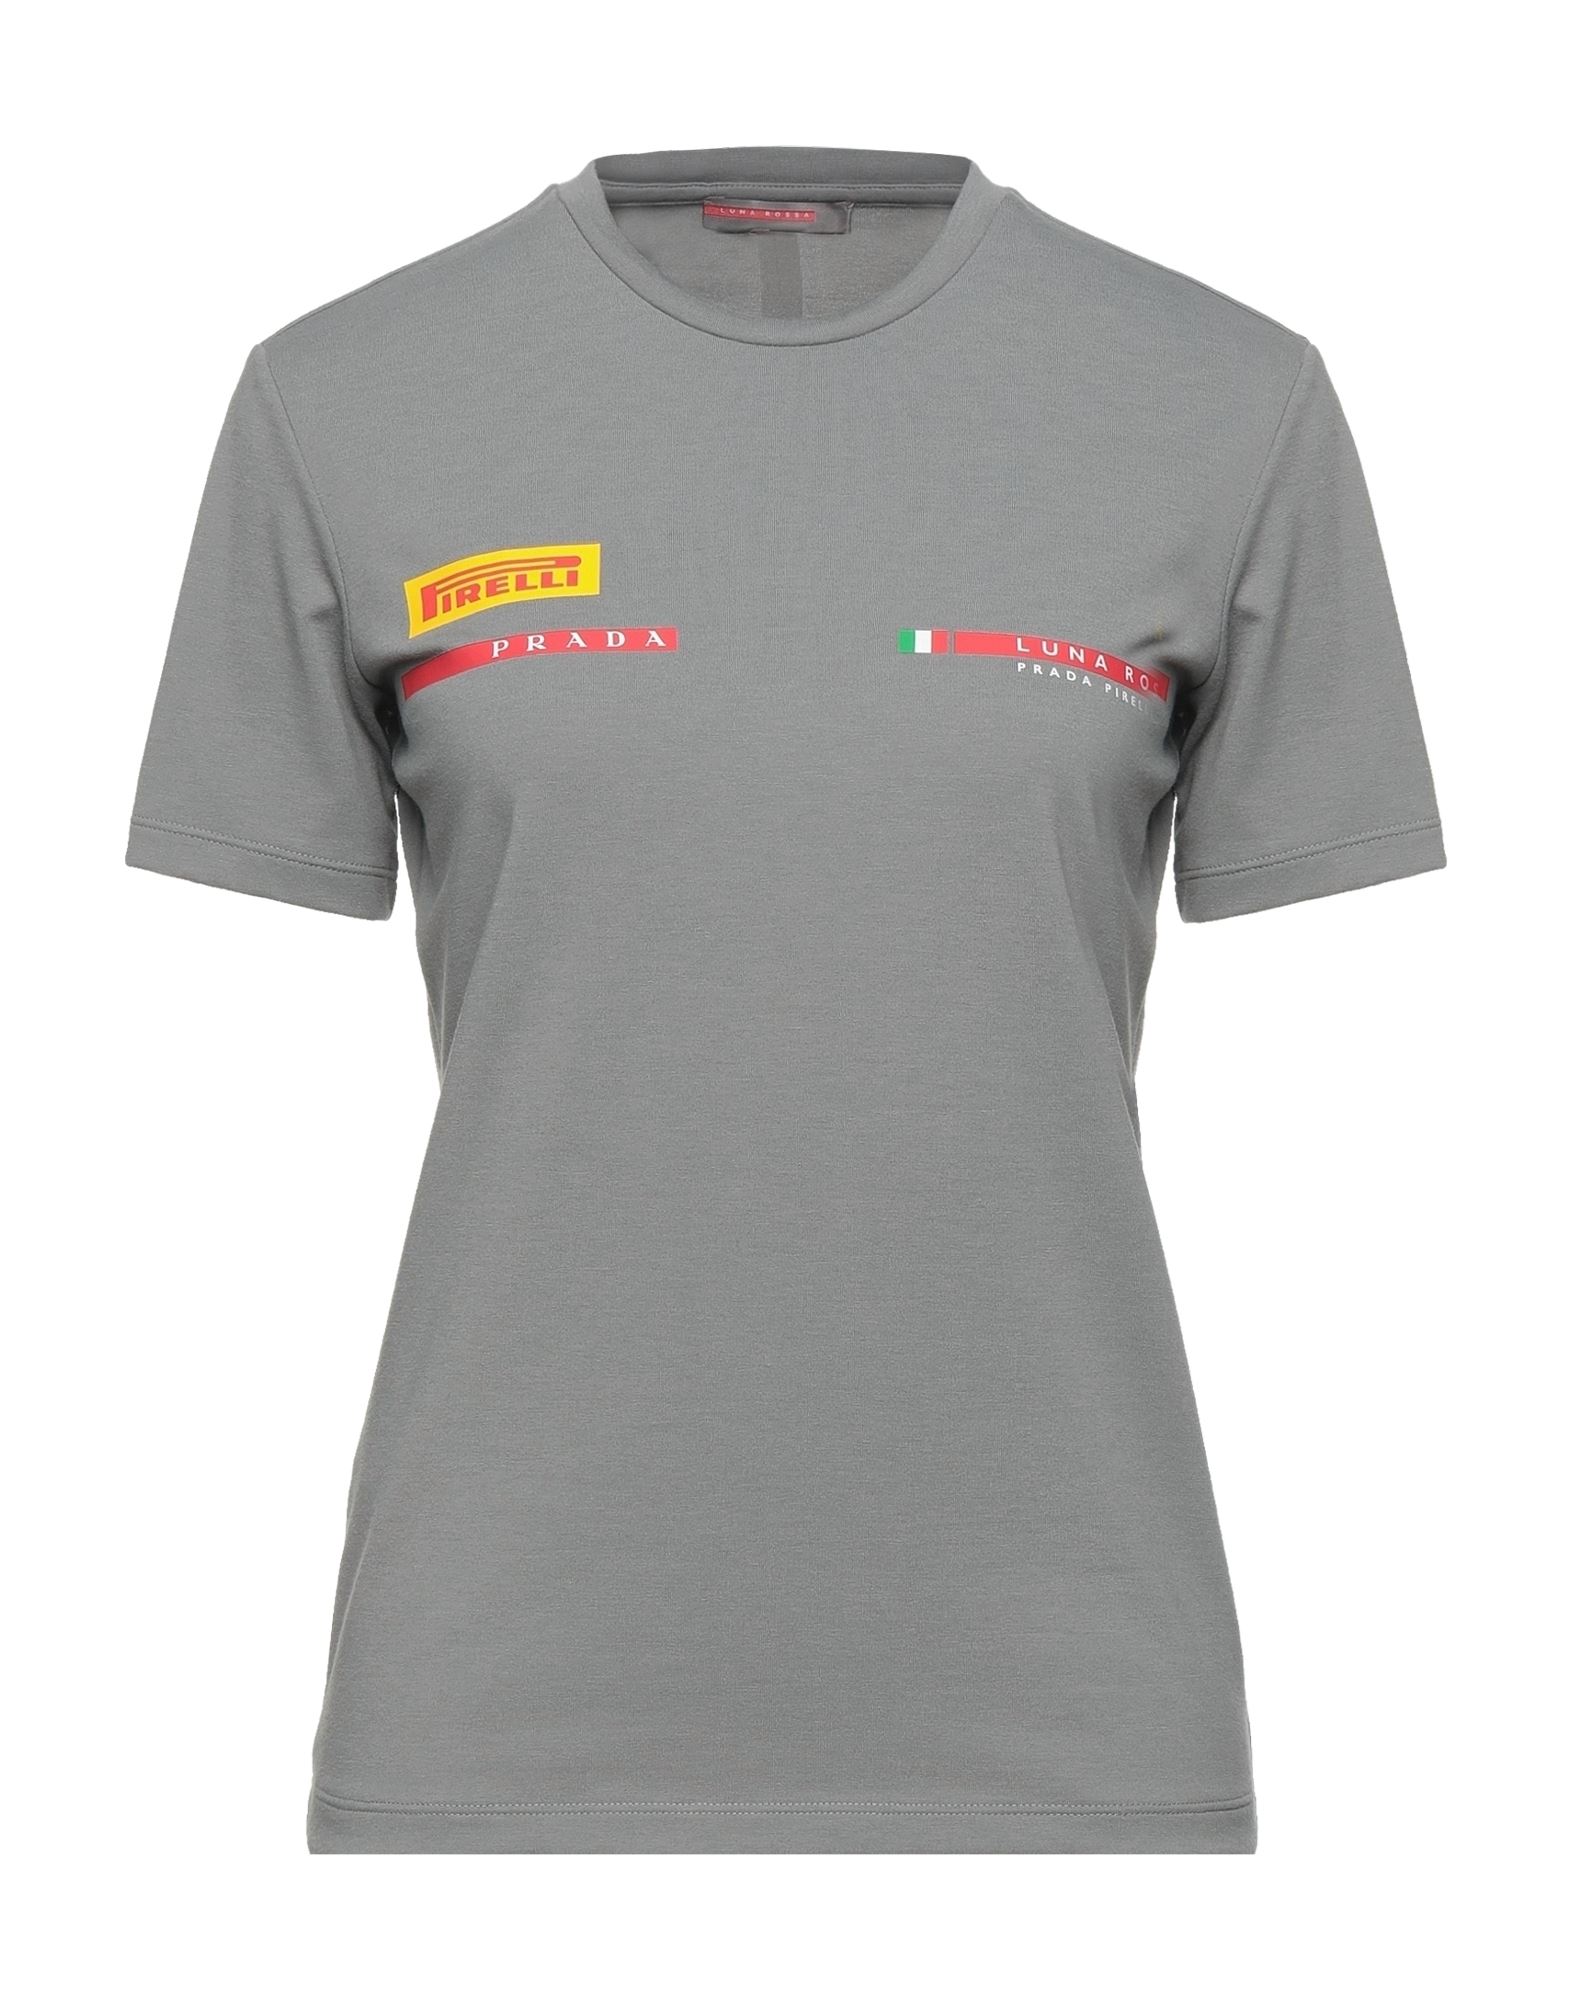 Prada Luna Rossa T-shirts In Grey